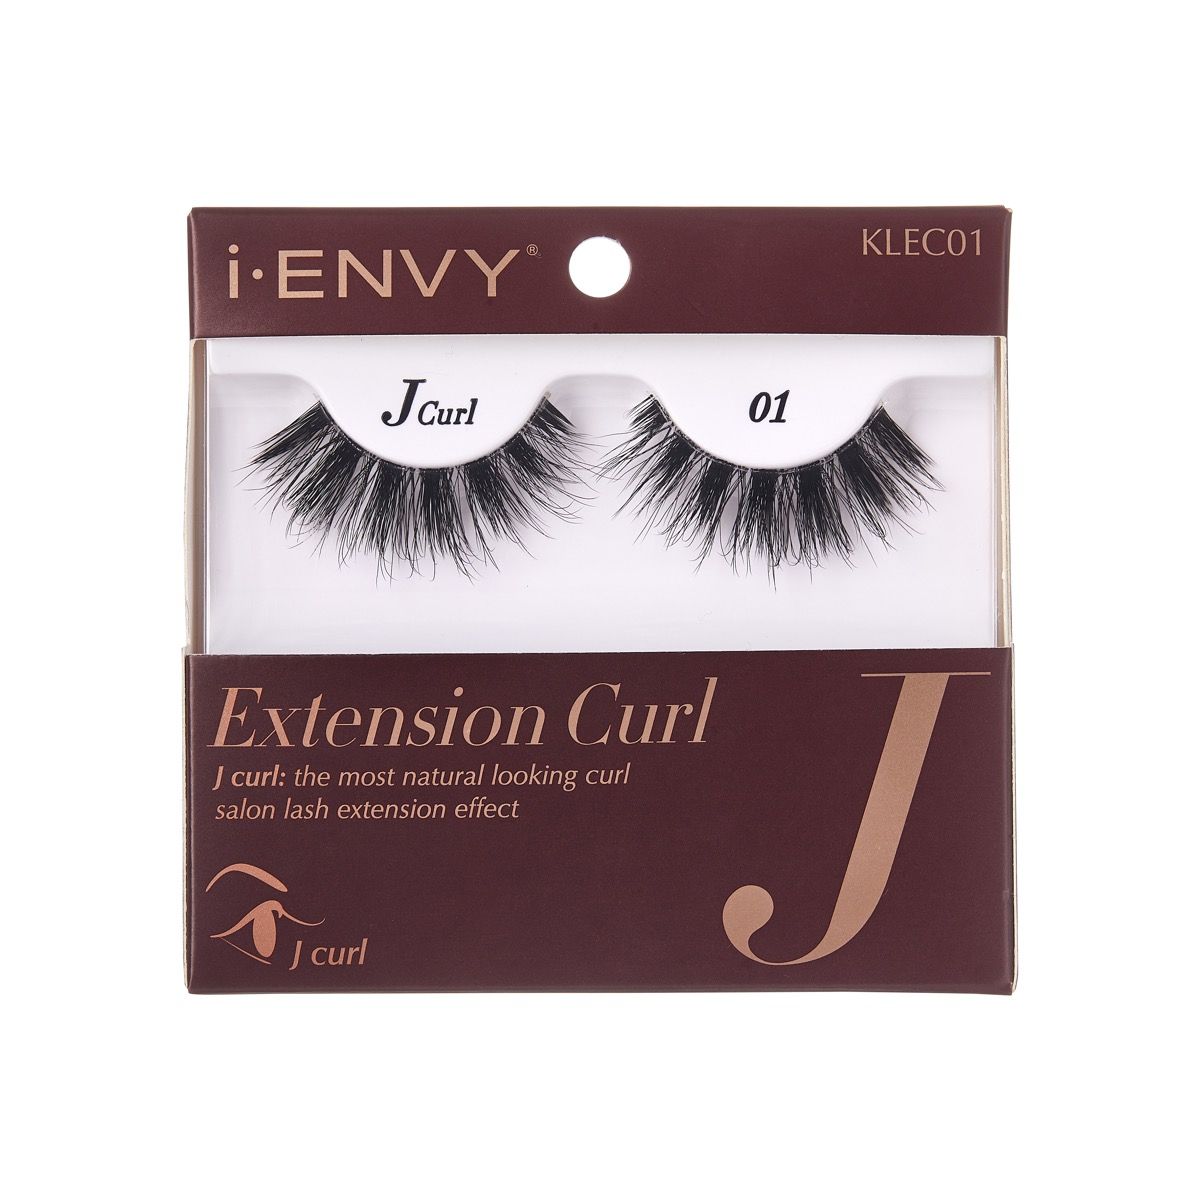 i.ENVY Extension Curl J (KLEC01)